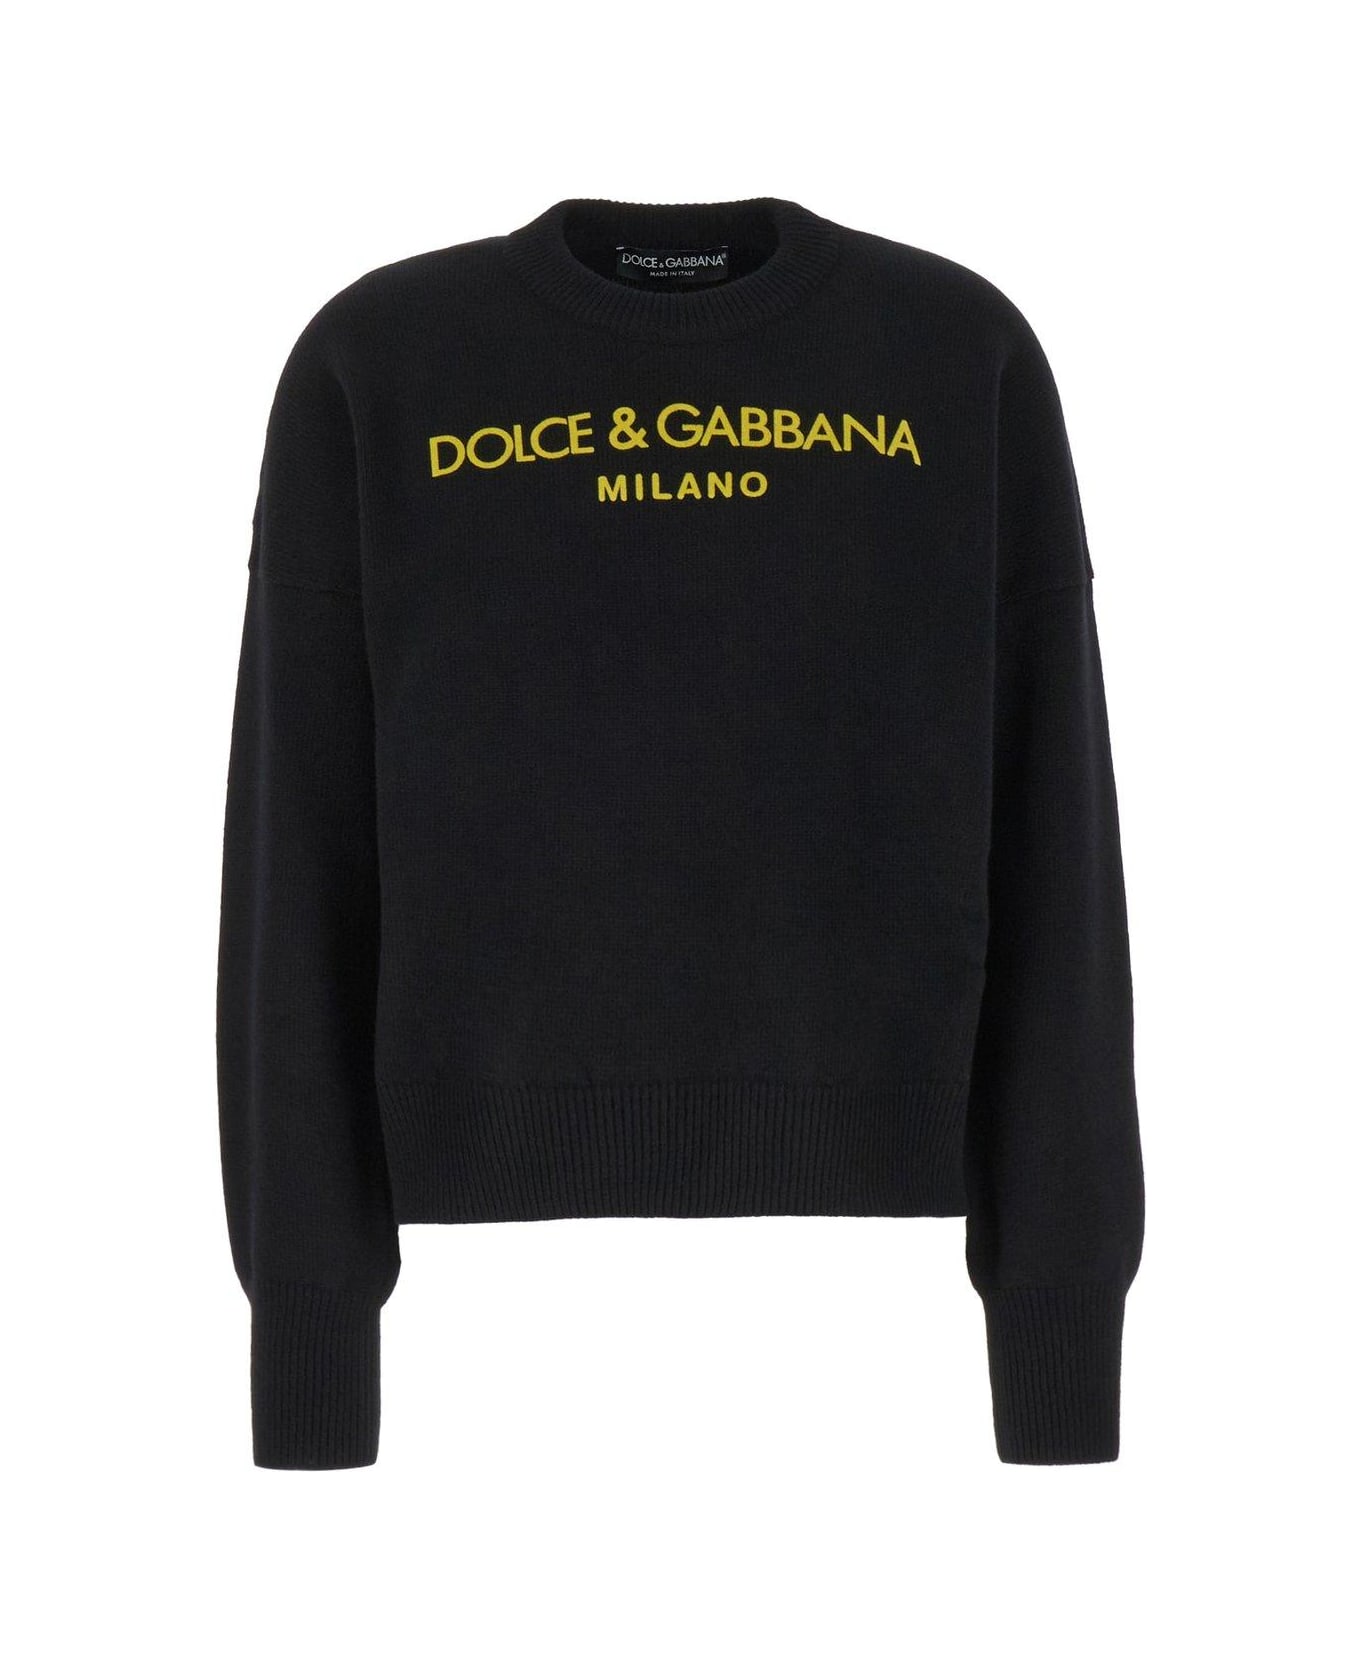 Dolce & Gabbana Logo Printed Knit Jumper - Nero Giallo ニットウェア